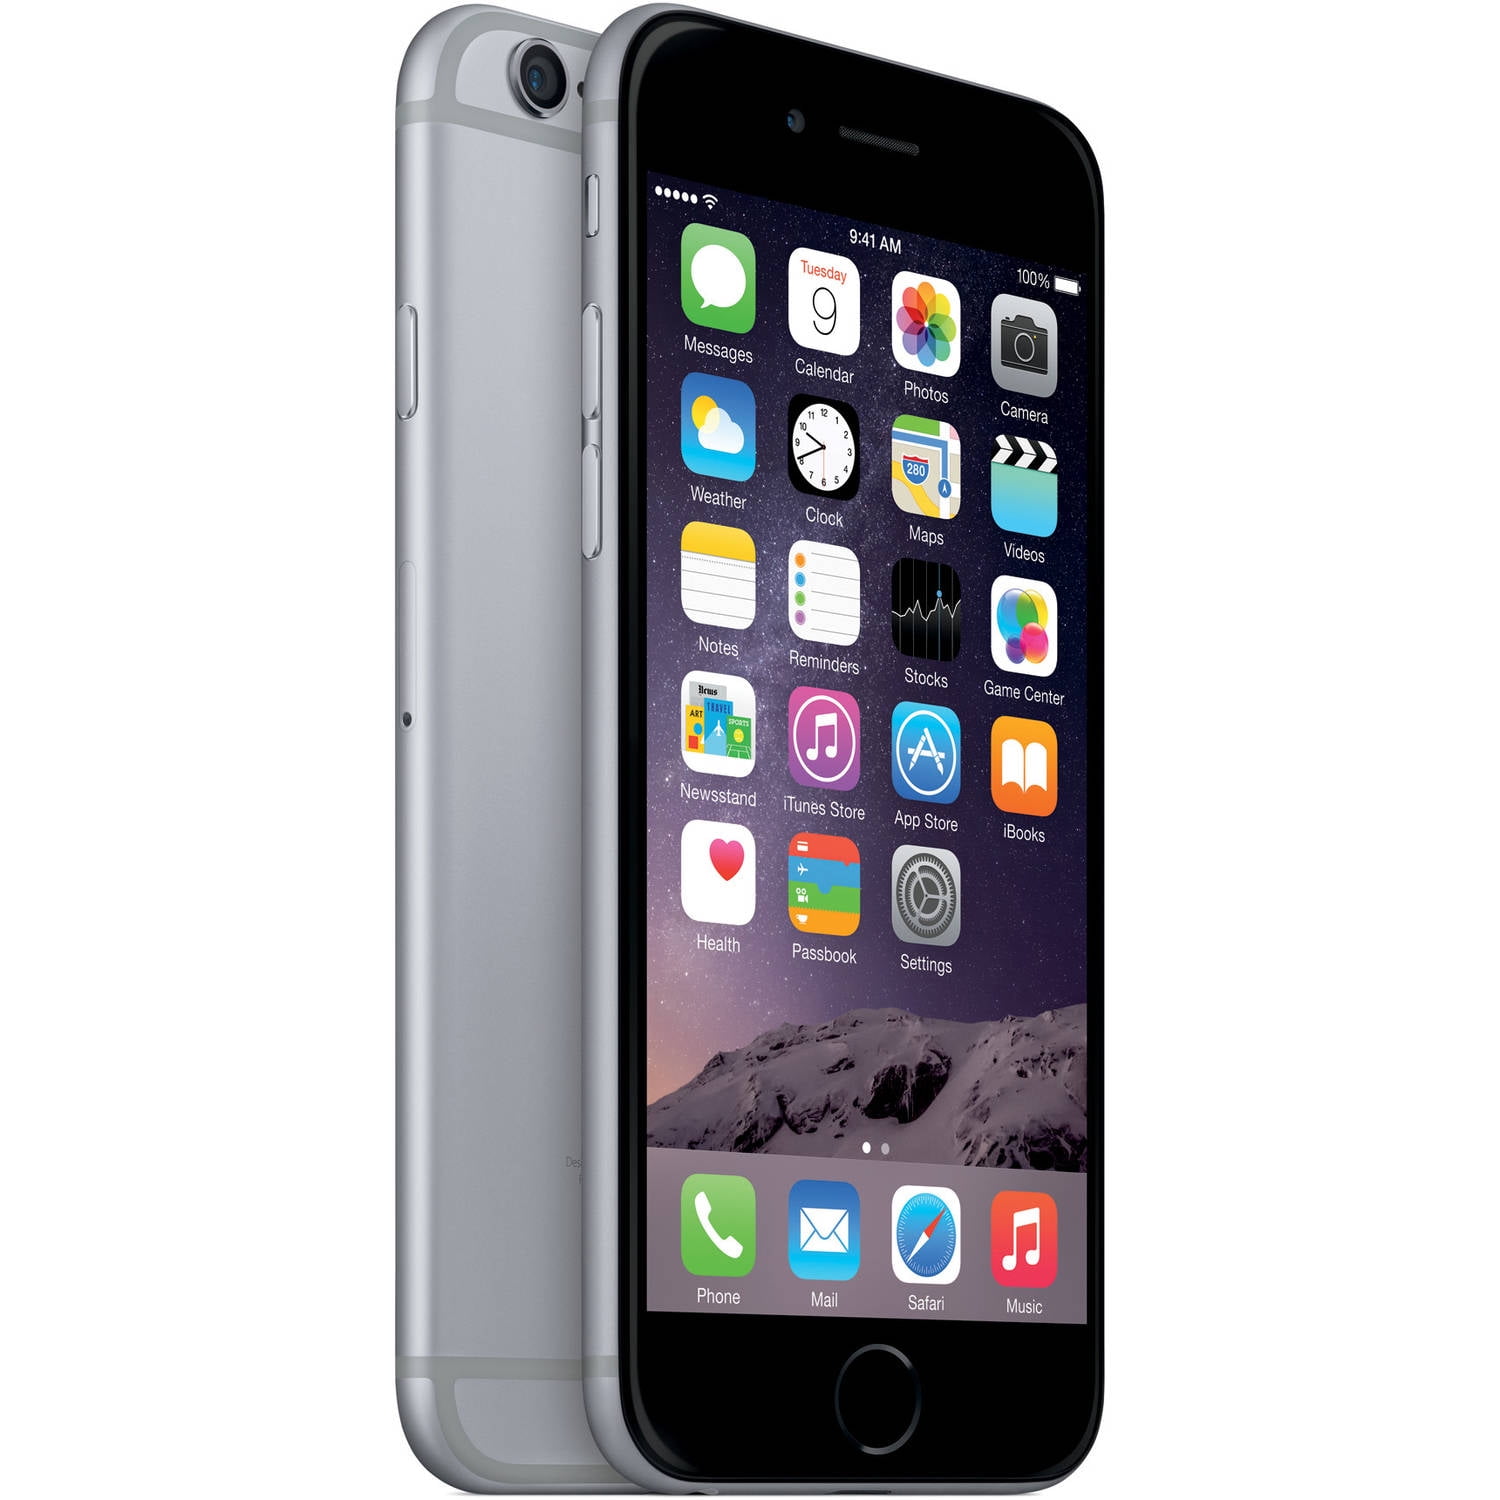 Apple iPhone 6 16GB GSM Unlocked - Space Gray (Used) + Ting SIM Card